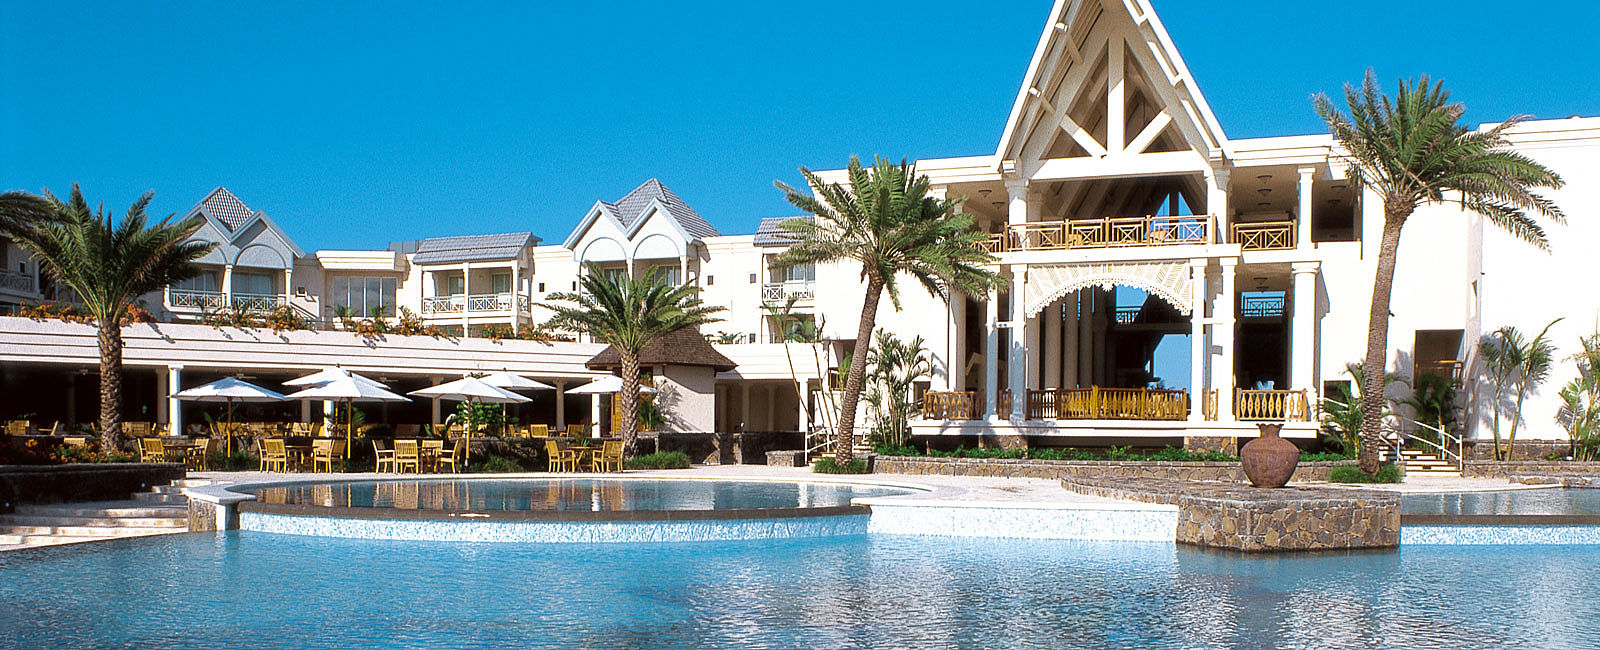 HOTEL NEWS
 The Crystal Suite: Neuer Privat-Hammam im Spa von The Residence Mauritius 
